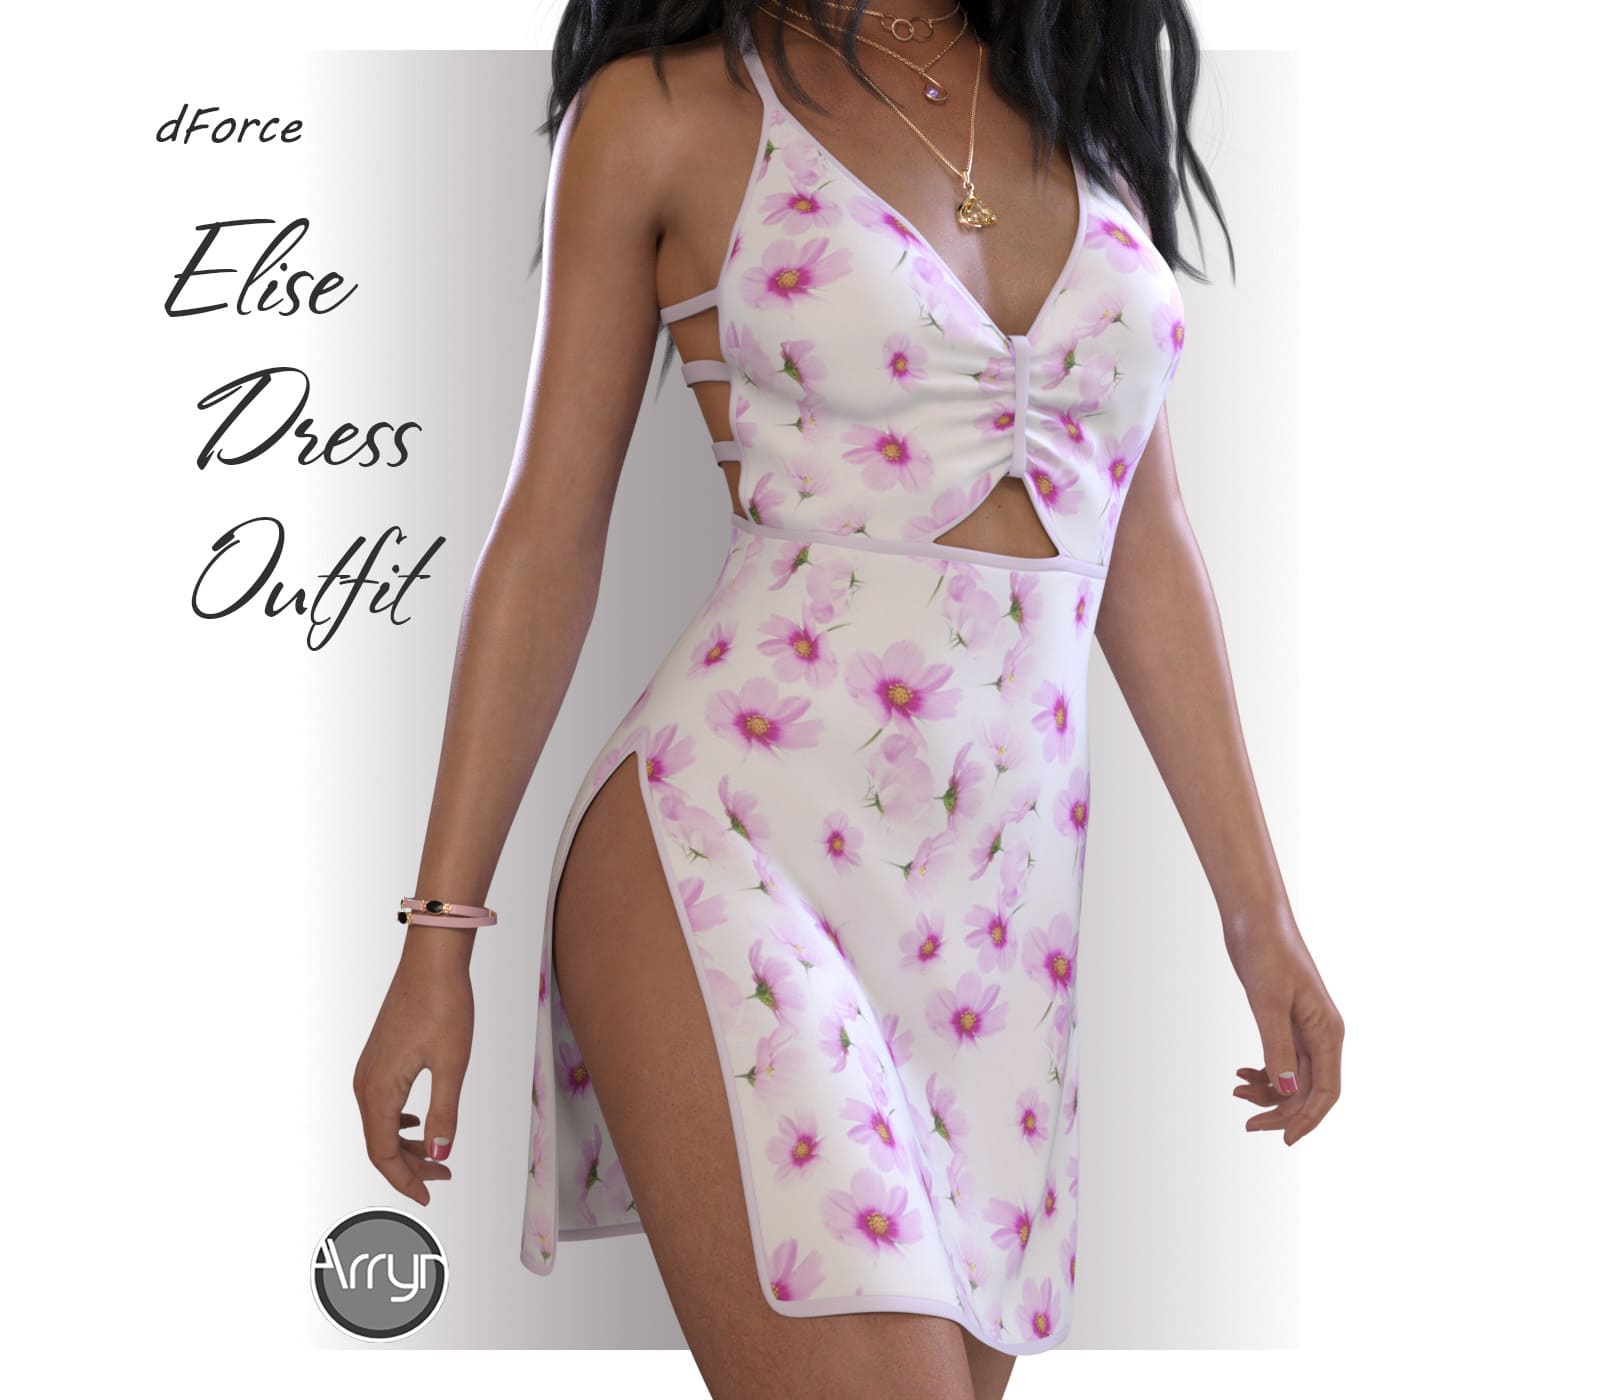 dForce Elise Cocktail Dress outfit for Genesis 8 Females_DAZ3D下载站